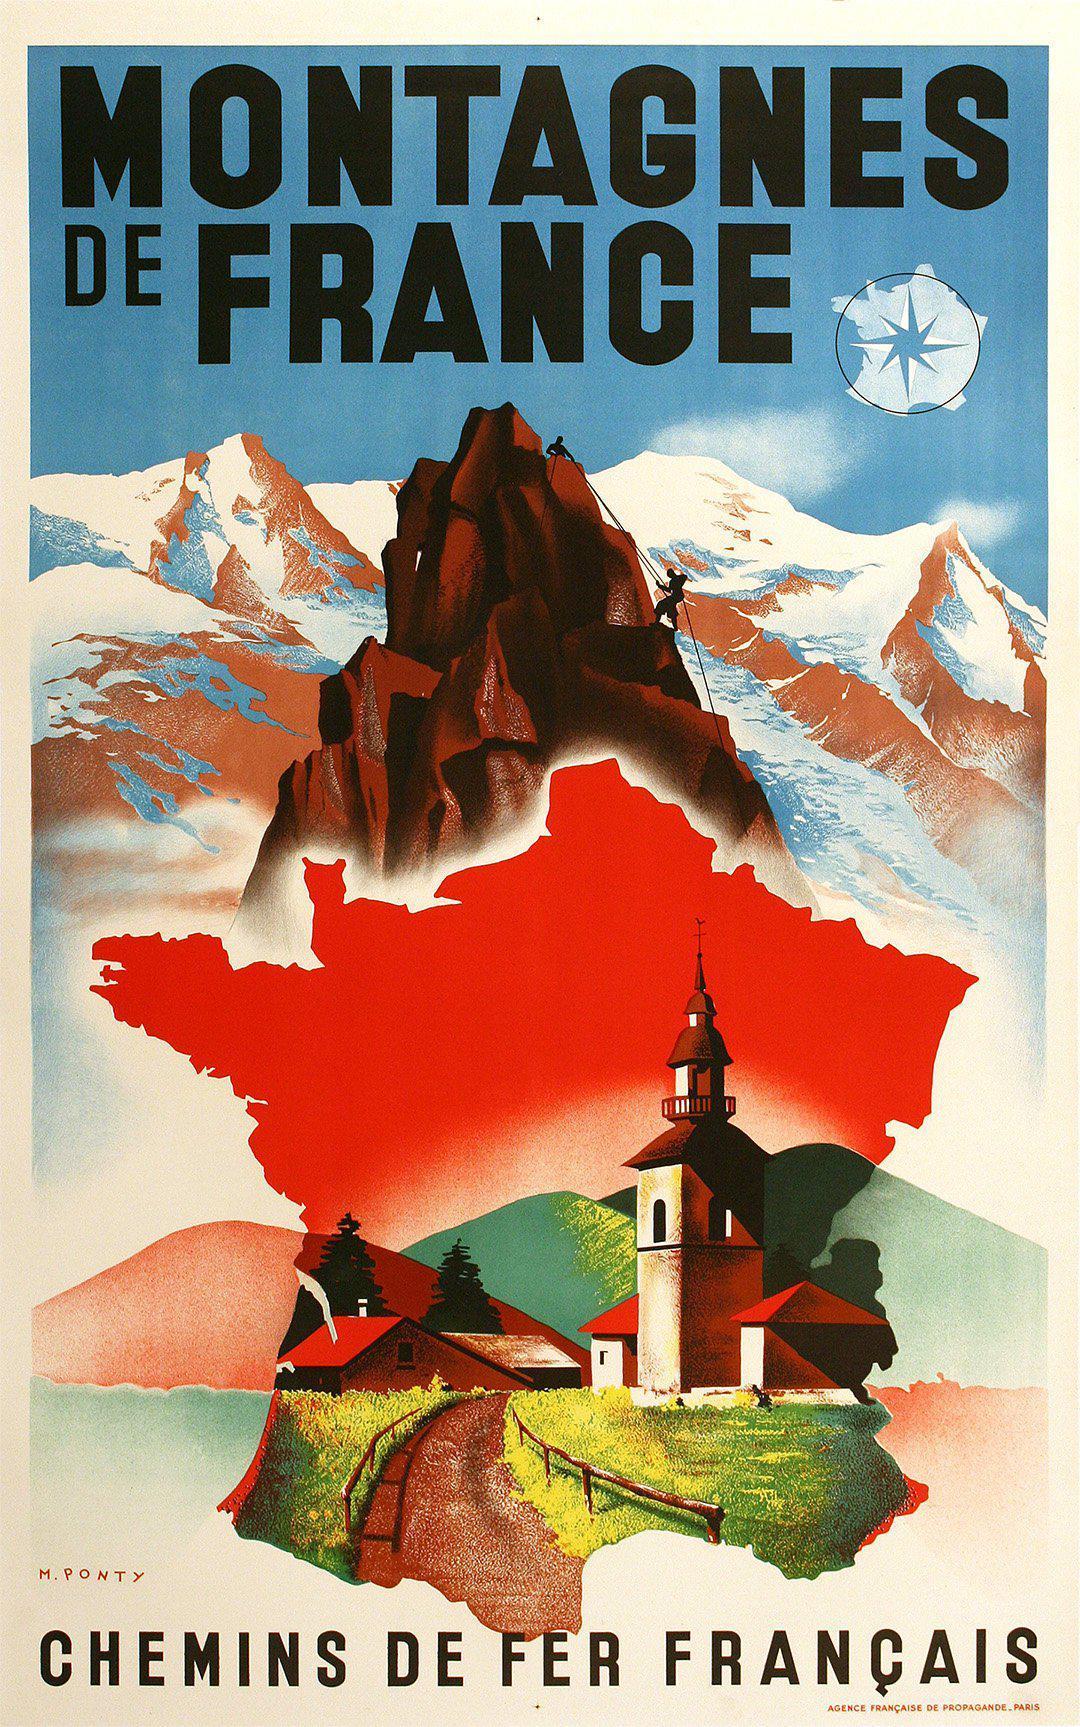 Original Vintage Montagnes de France Travel Poster by Ponty c1935